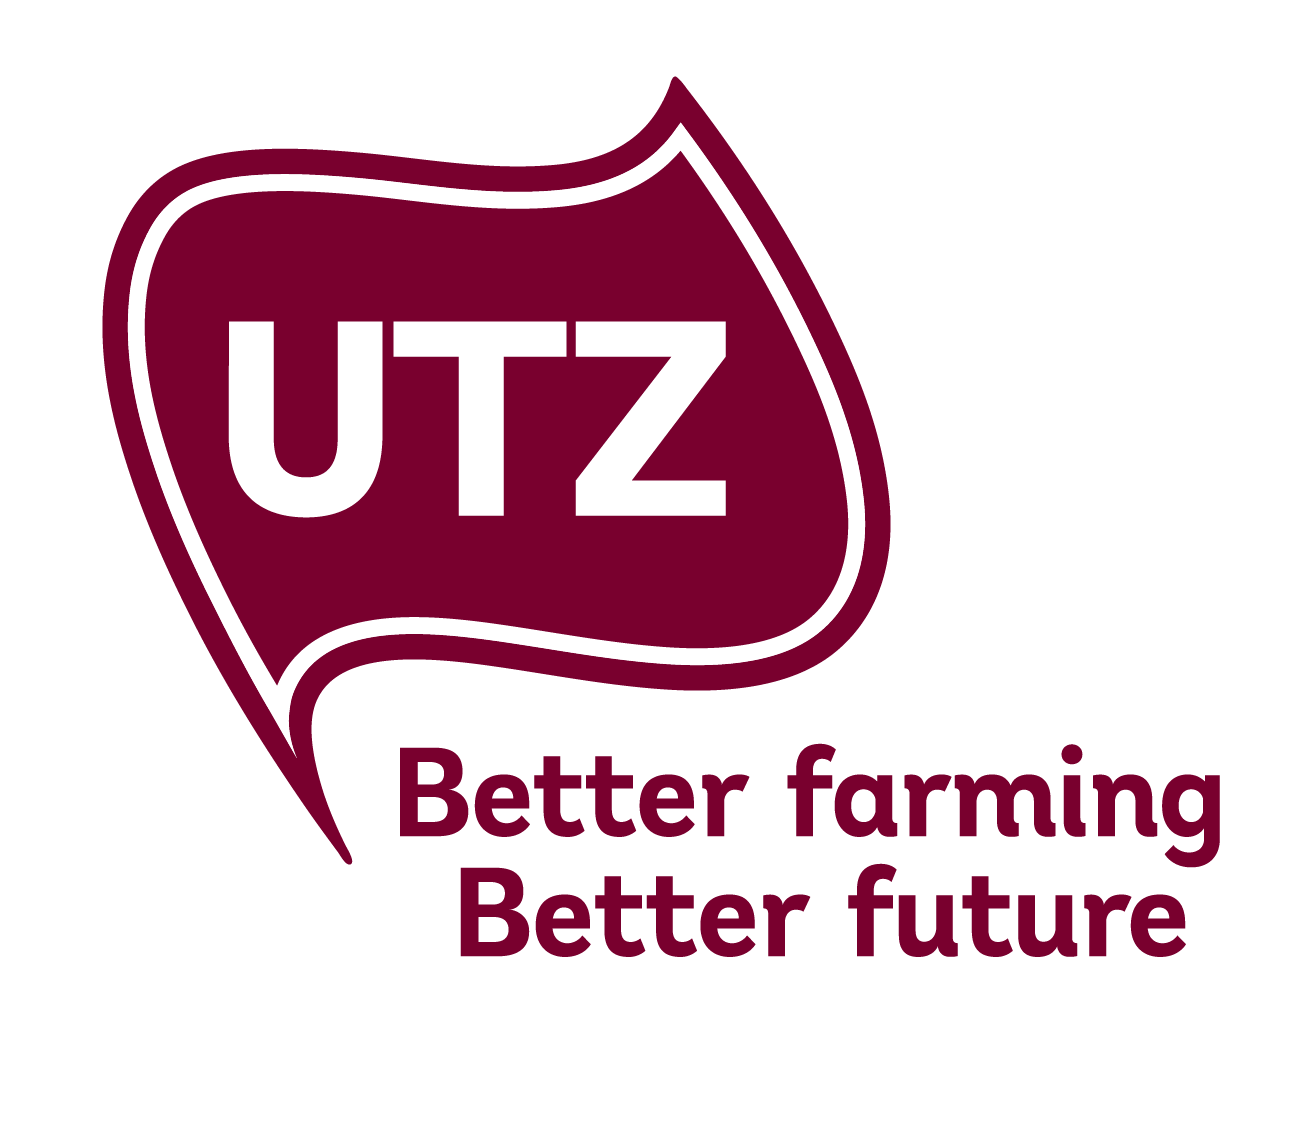 The-Rainforest-Alliance-UTZ_Logos